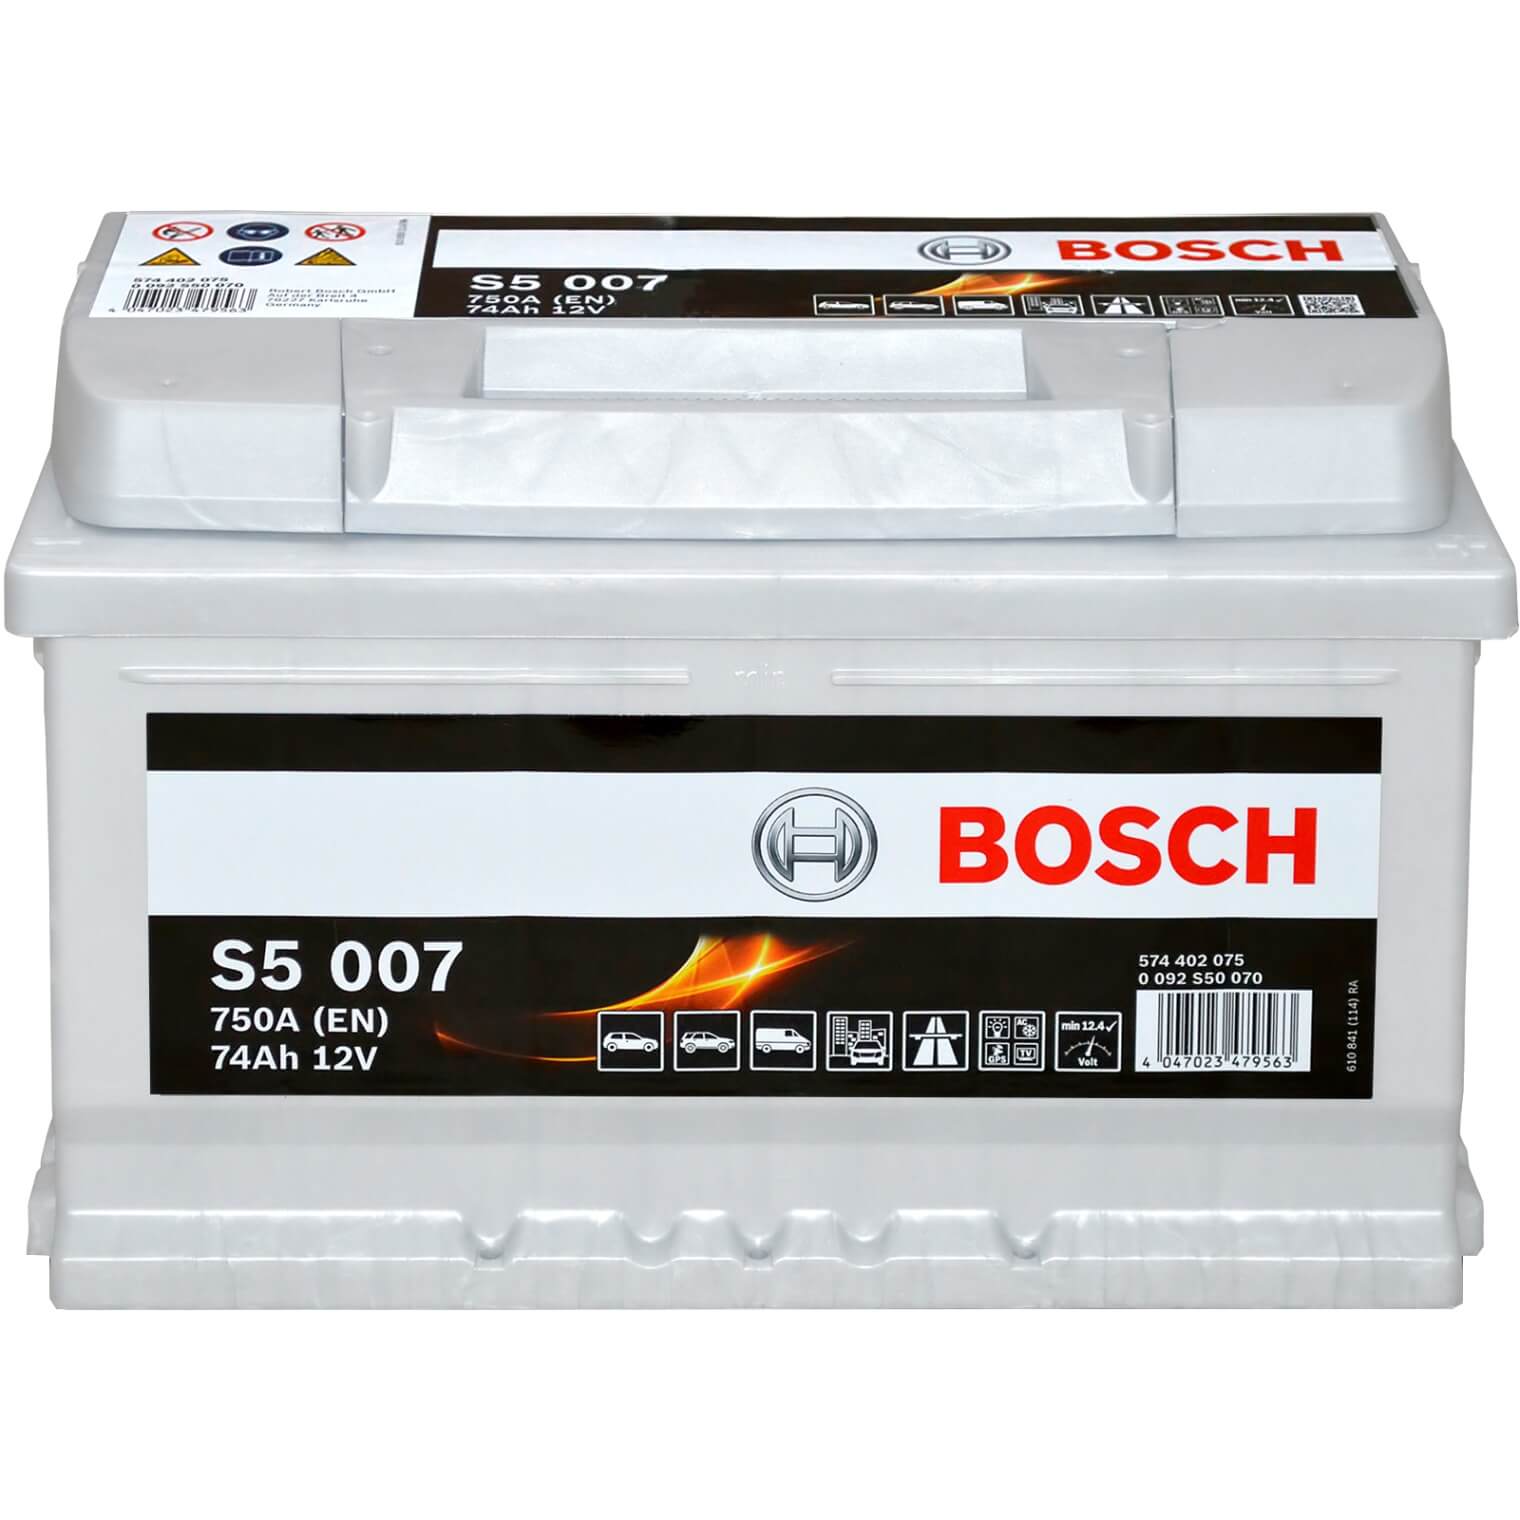 Autobatterie Bosch 12V 74Ah S5007 Batterie 0092S50070